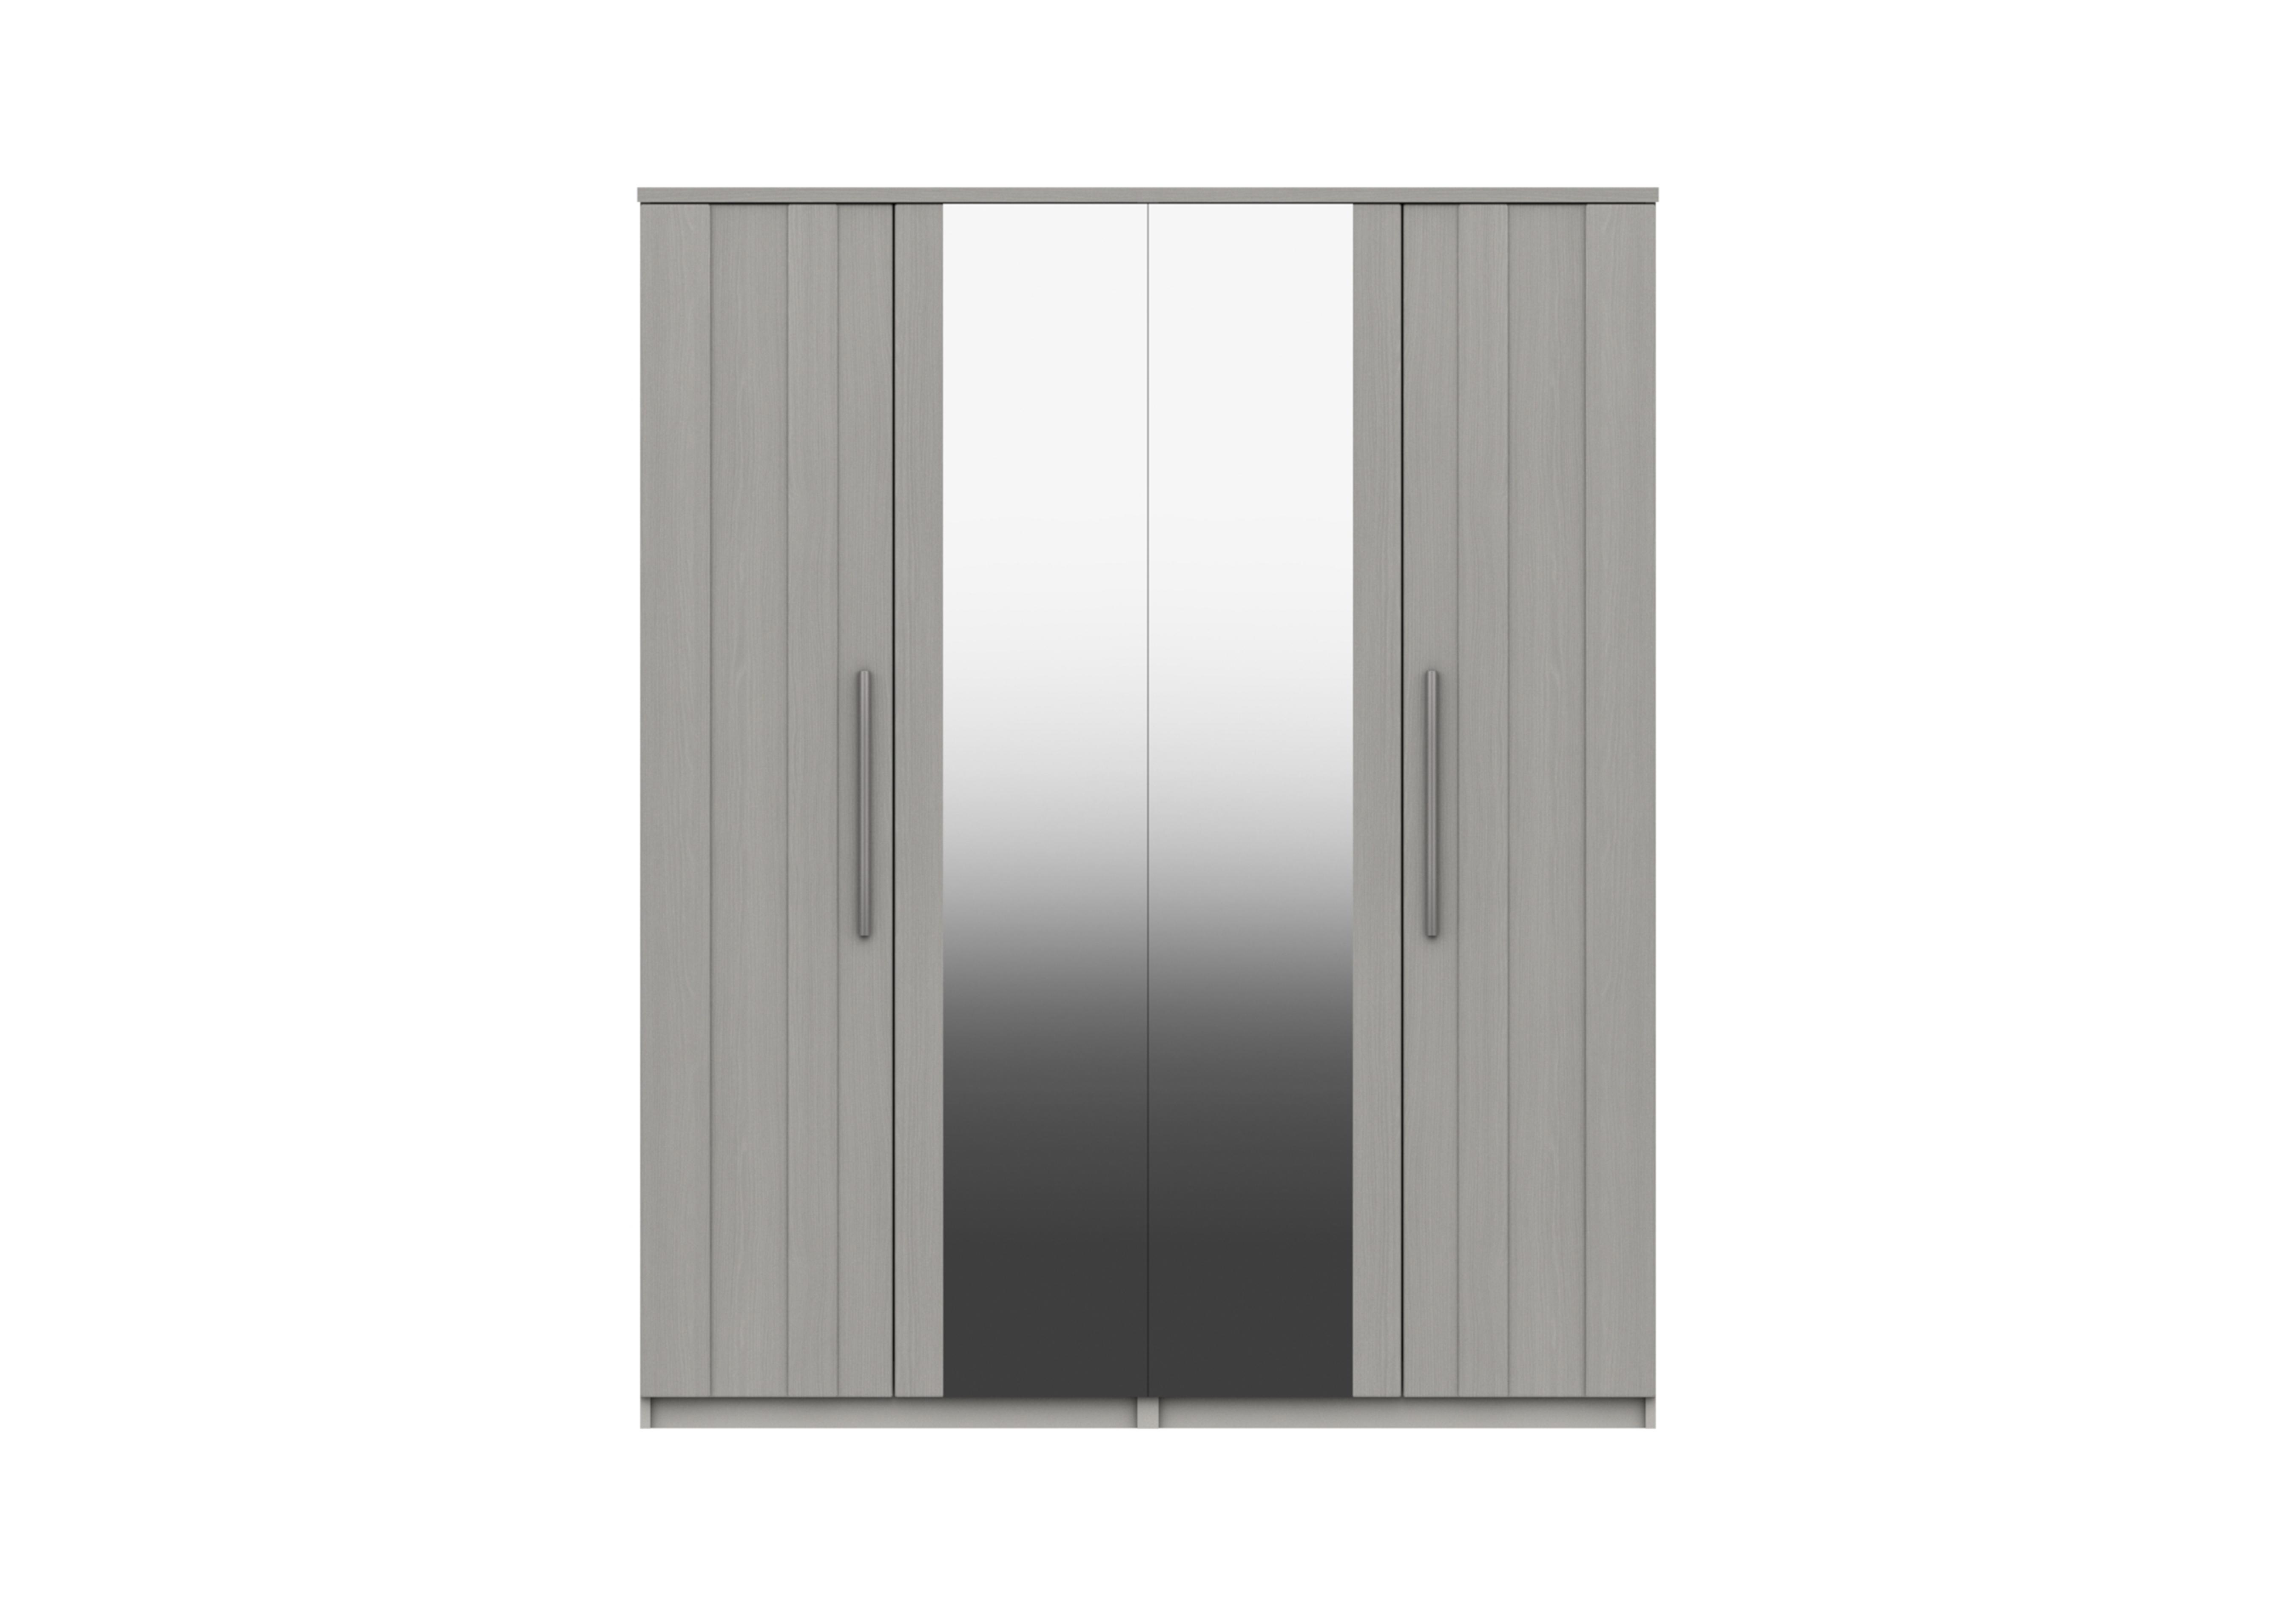 Victoria 4 Door Wardrobe with 2 Mirrors in Light Grey on Furniture Village